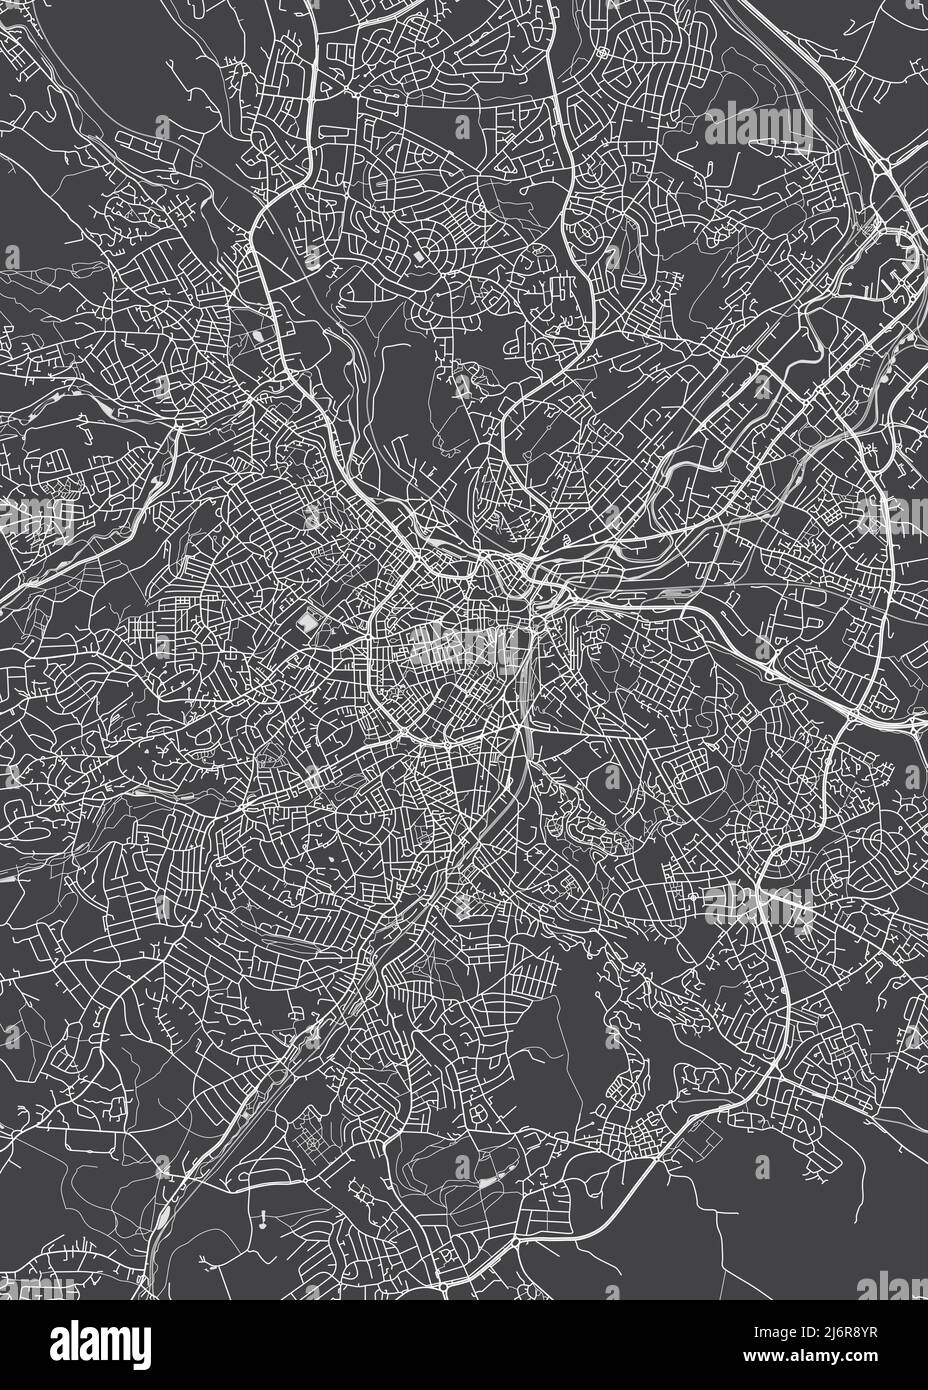 City map Sheffield, monochrome detailed plan, vector illustration Stock Vector